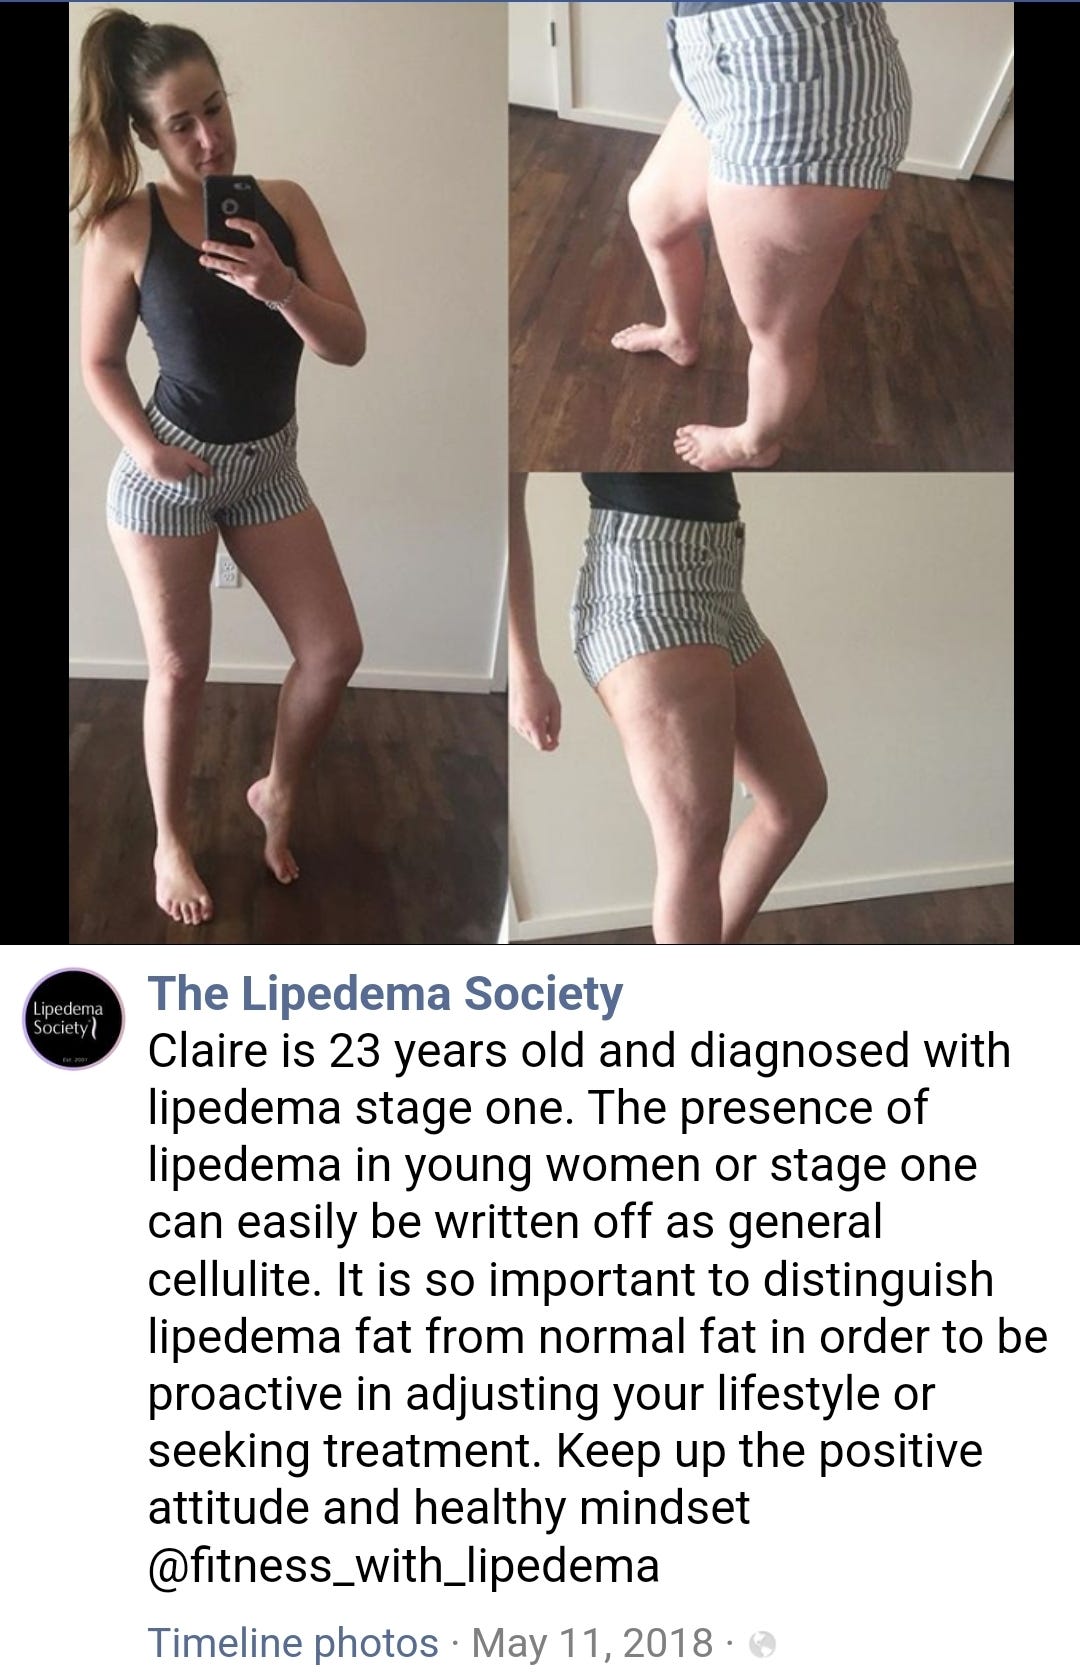 Thin Women Do Get Lipedema. Setting the record straight.